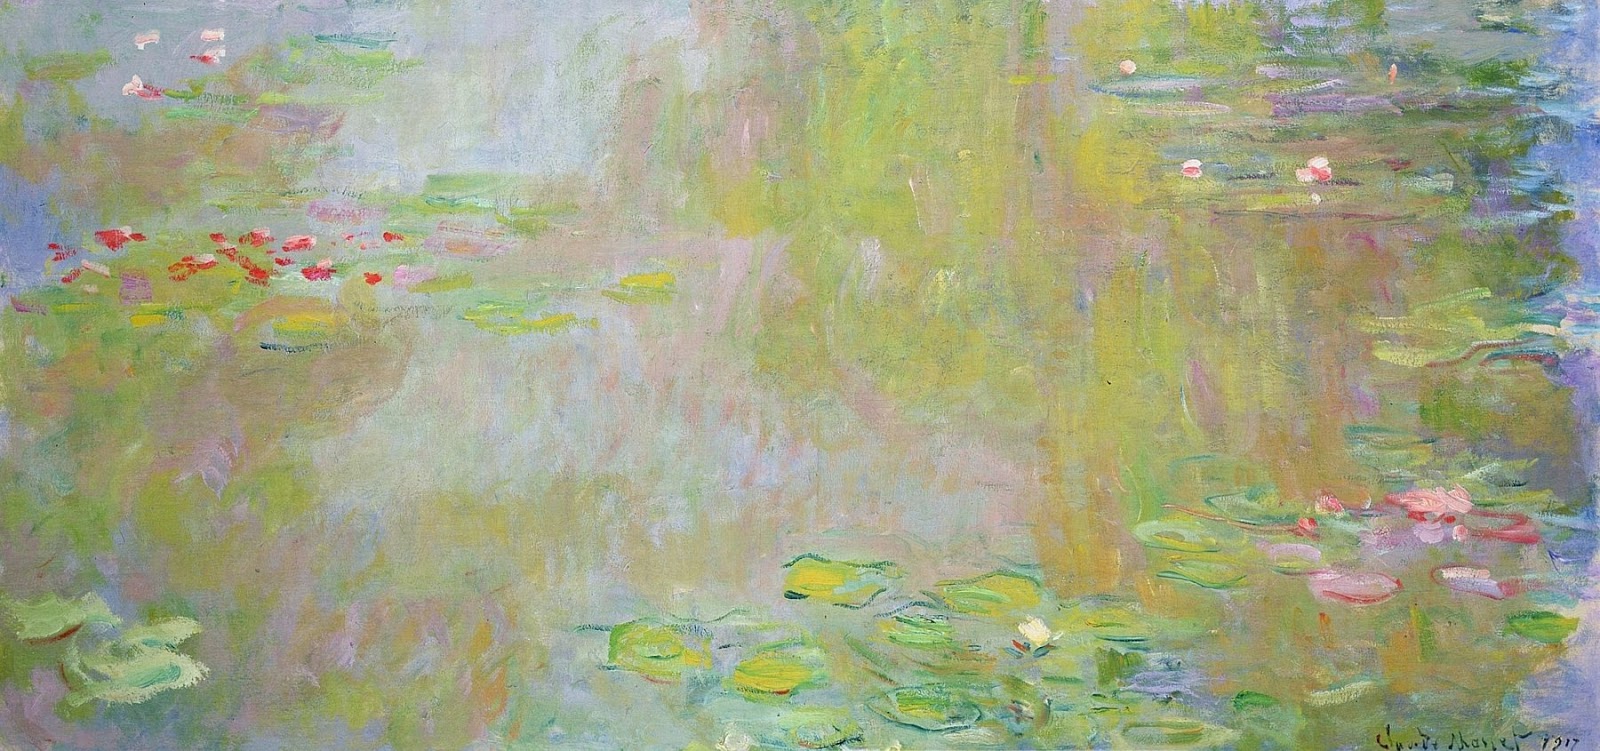 Claude+Monet-1840-1926 (409).jpg